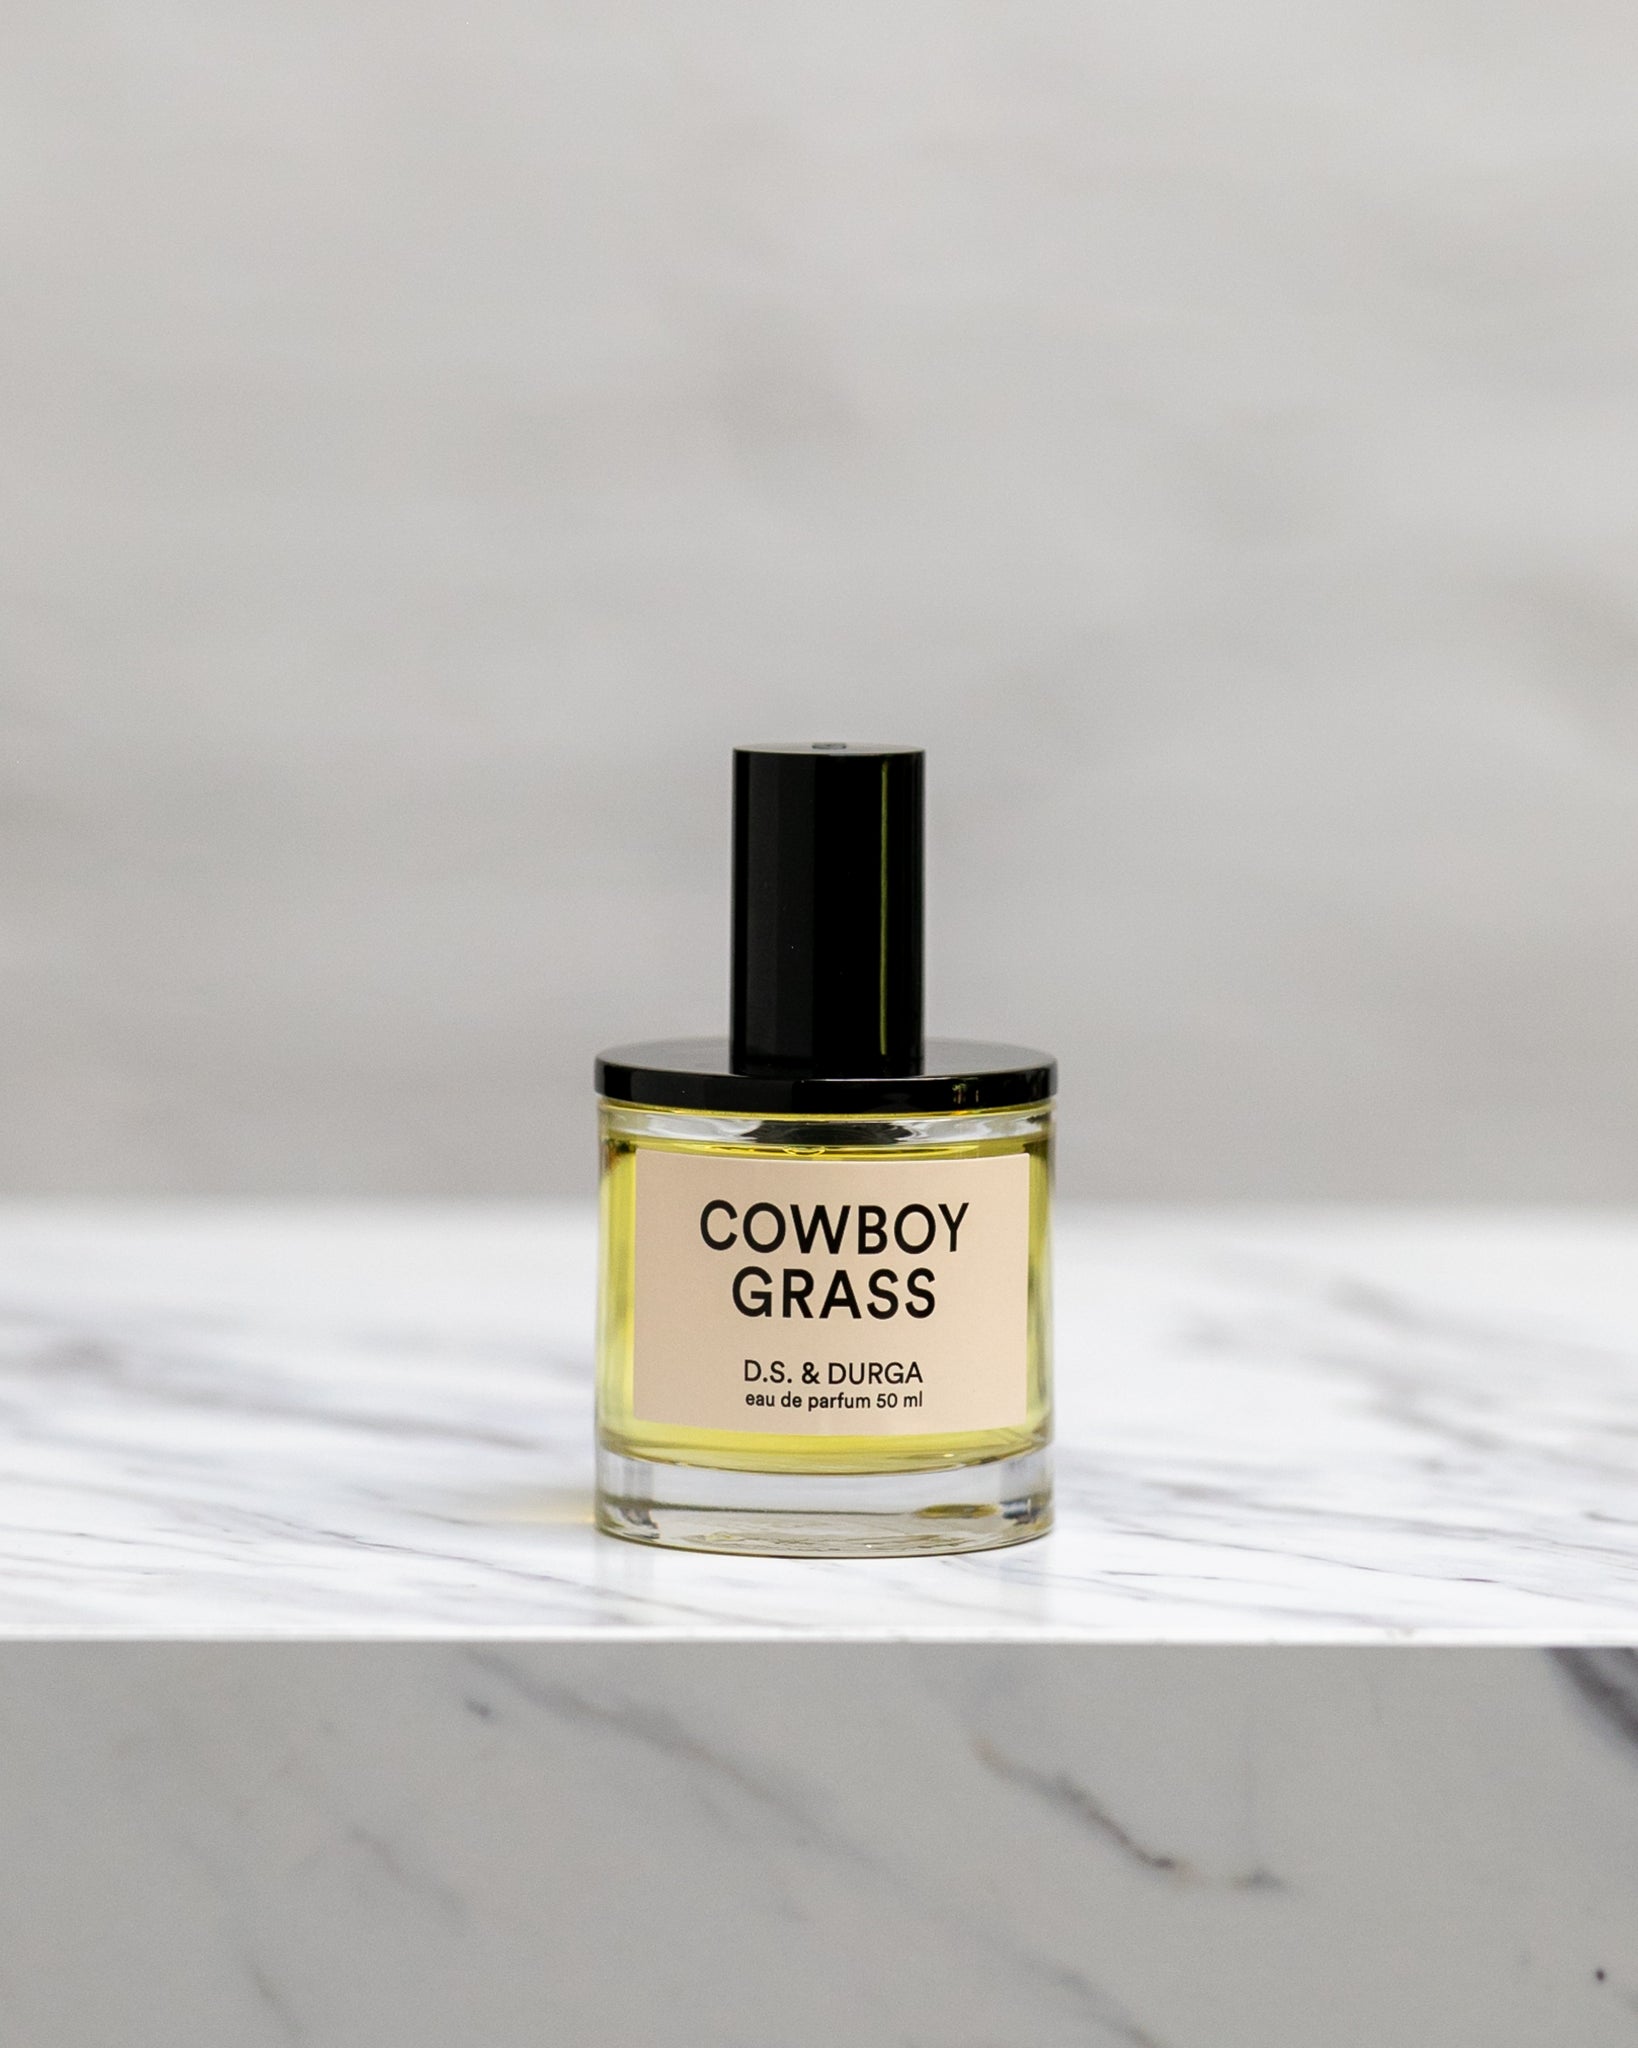 D.S. & Durga Perfume, Cowboy Grass bottle